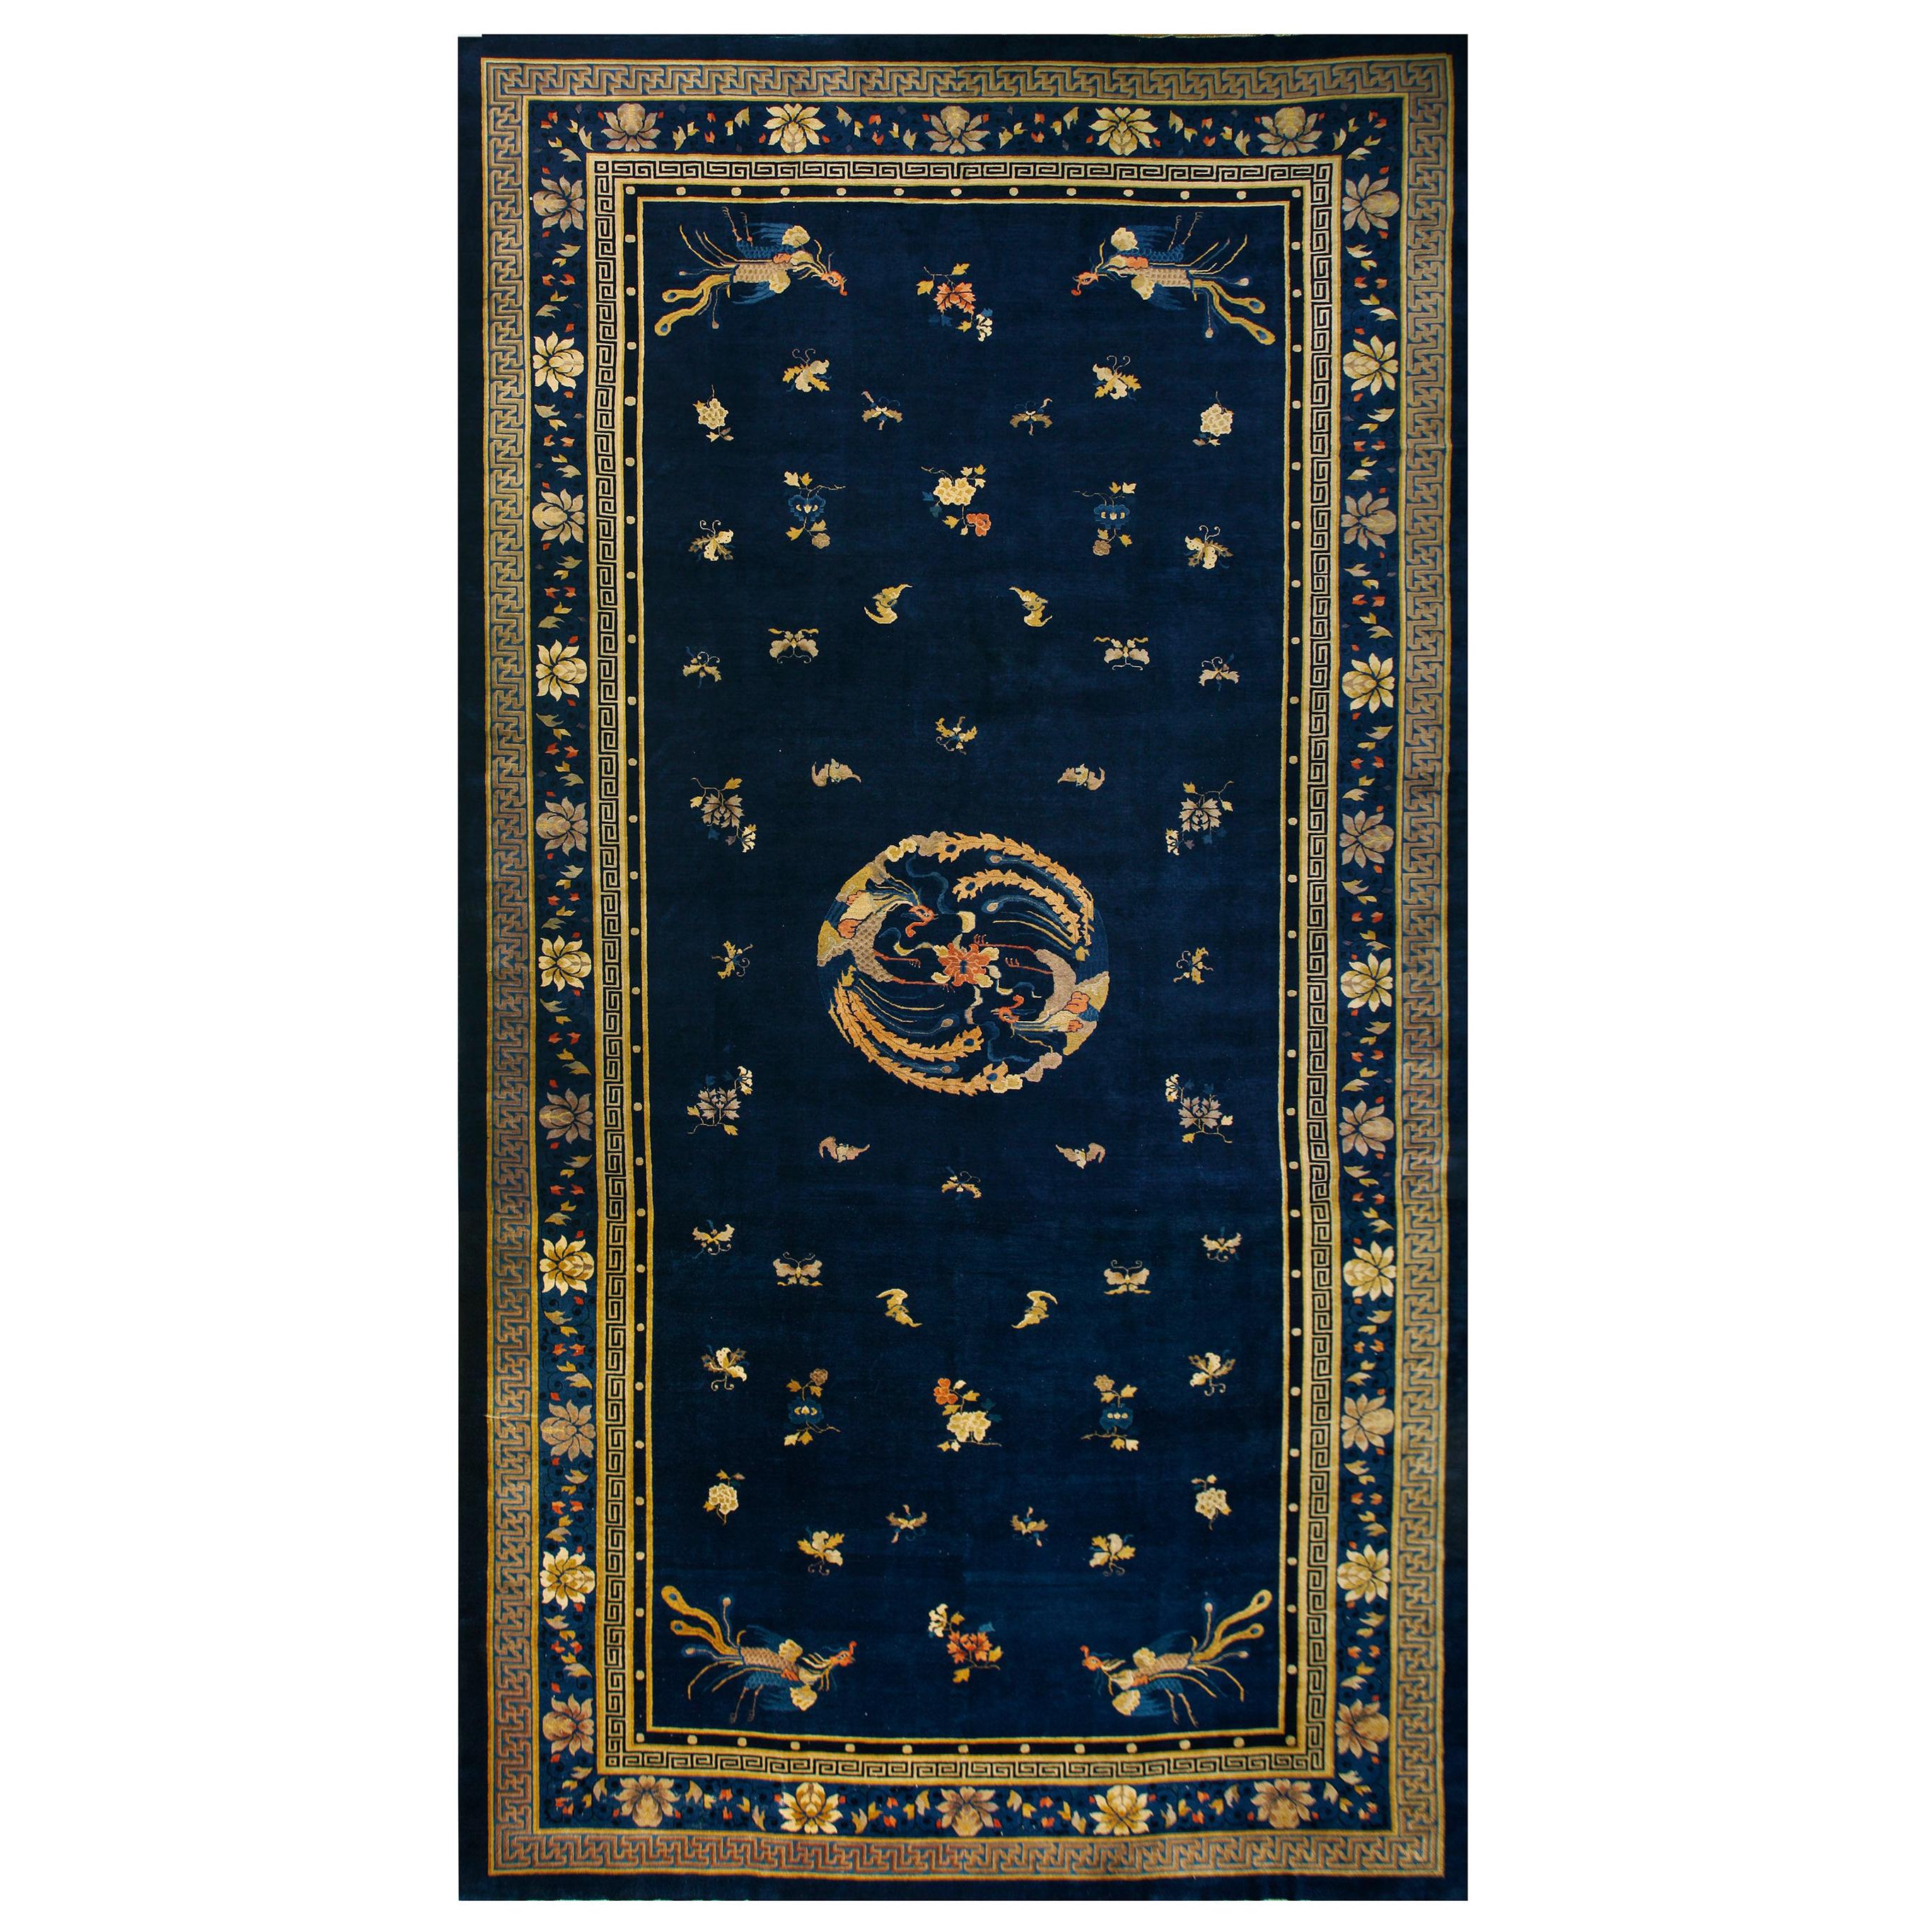 Late 19th Century Chinese Peking Carpet ( 12'2" x 22'8" - 370 x 690 cm  )